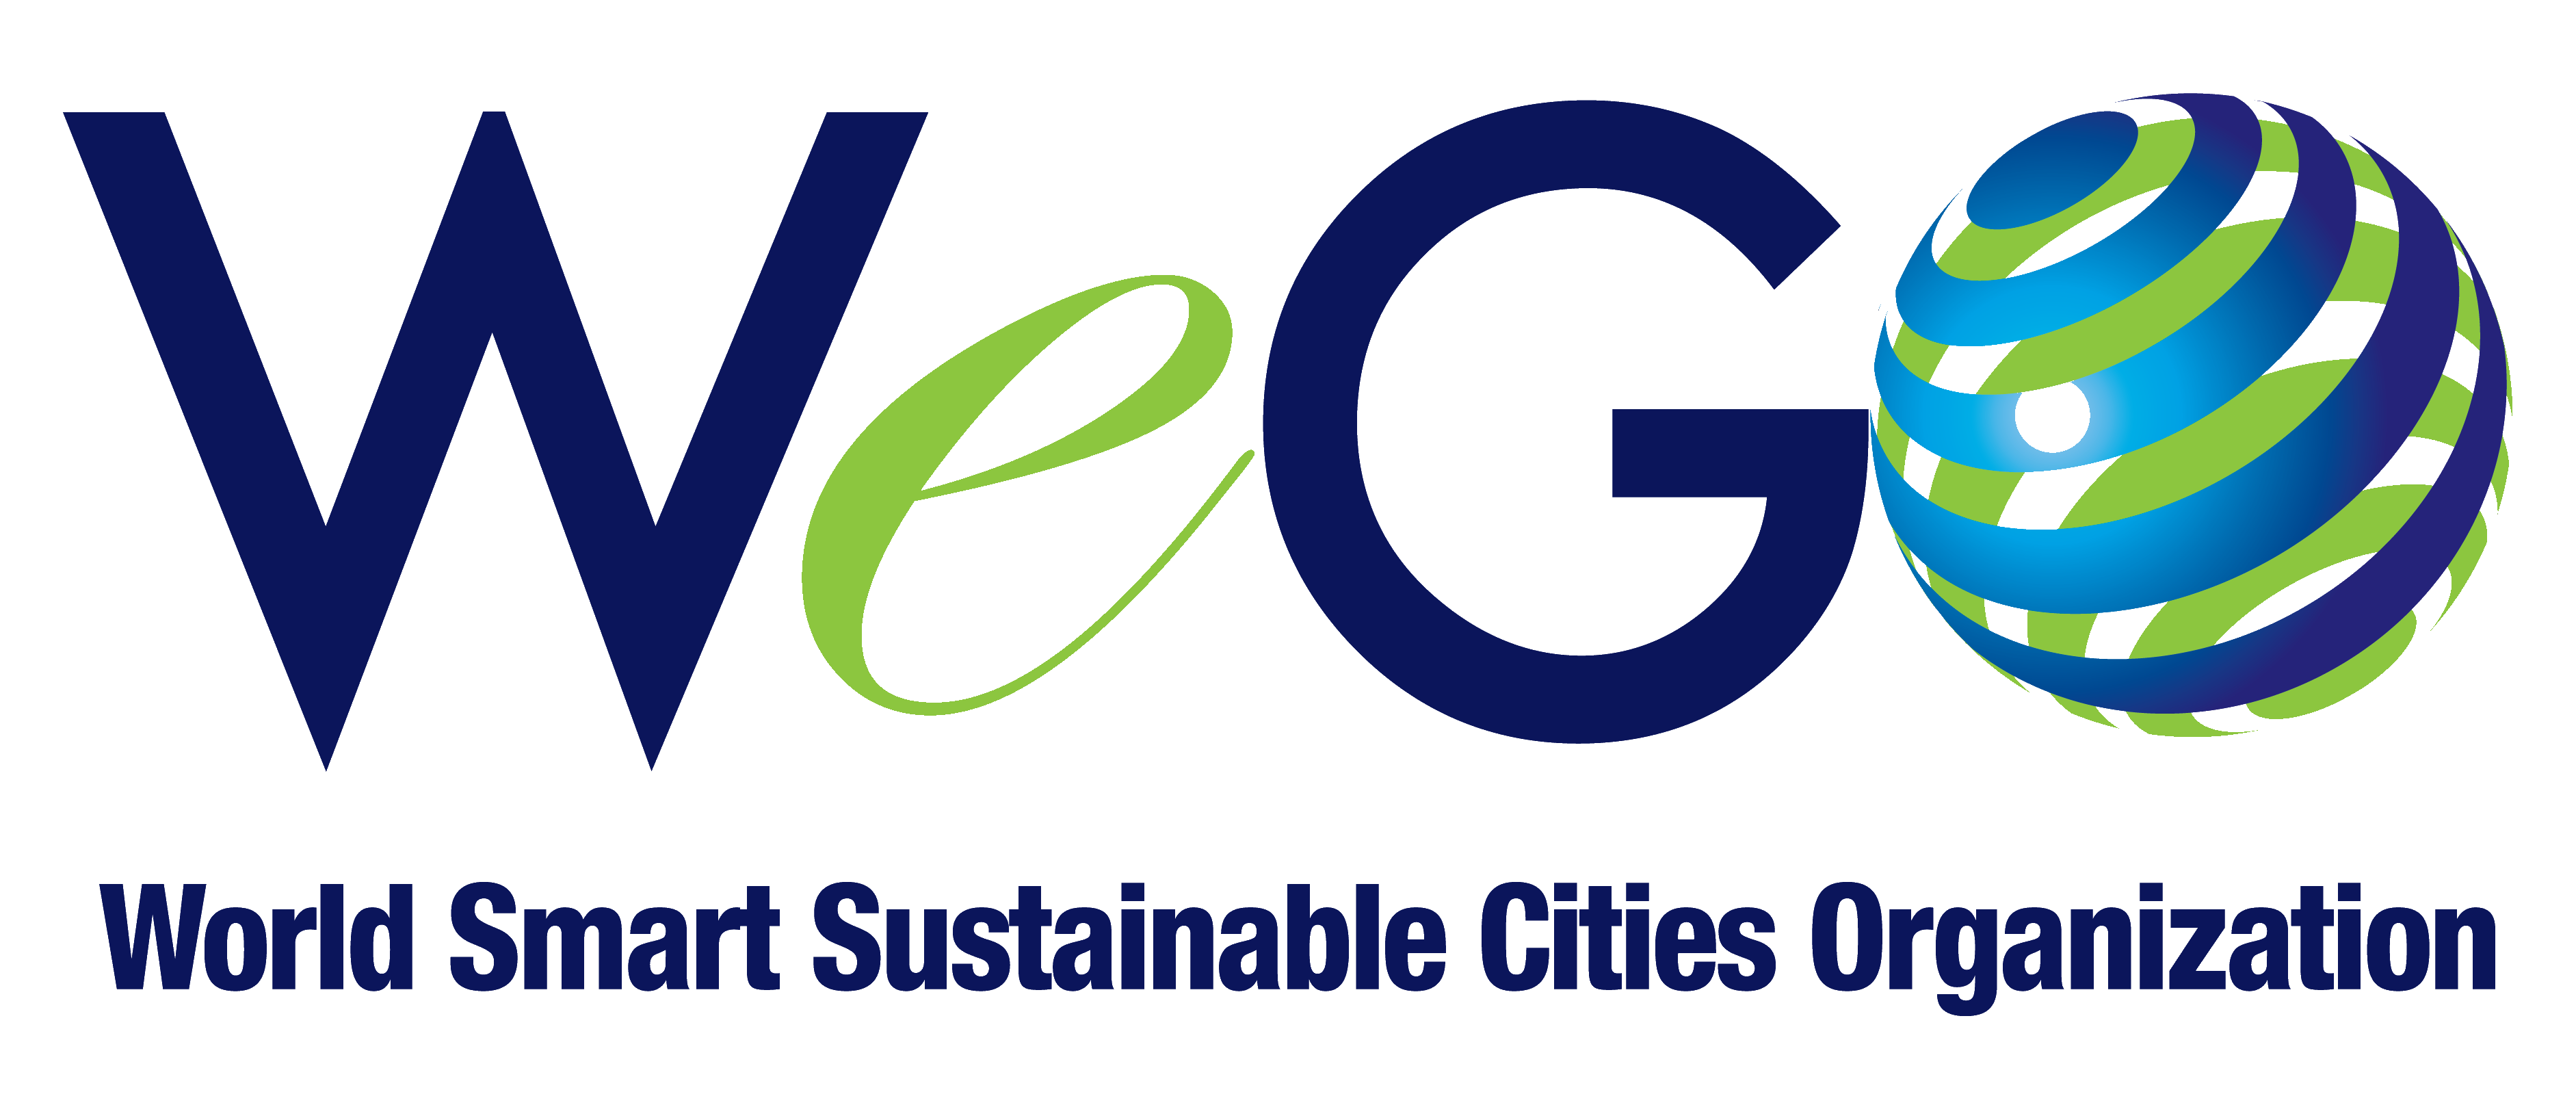 WeGO - Word Smart Sustainable Cities Organization